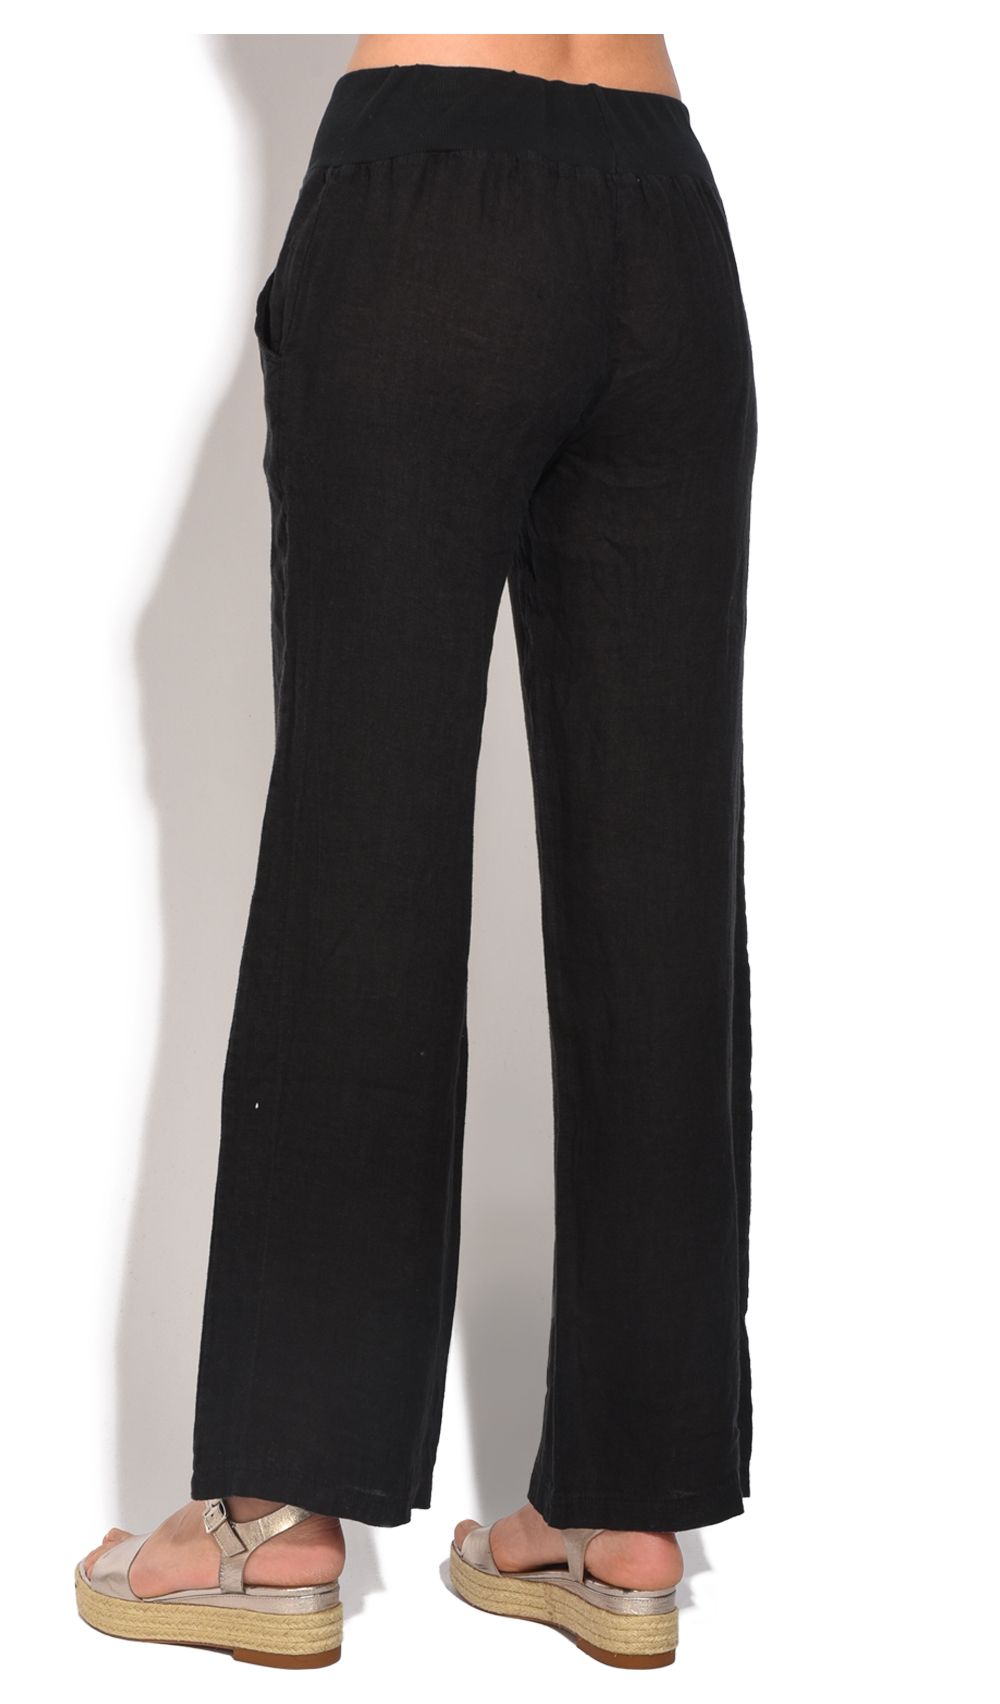 Fluid straight cut Pant with pockets and elastic waistband